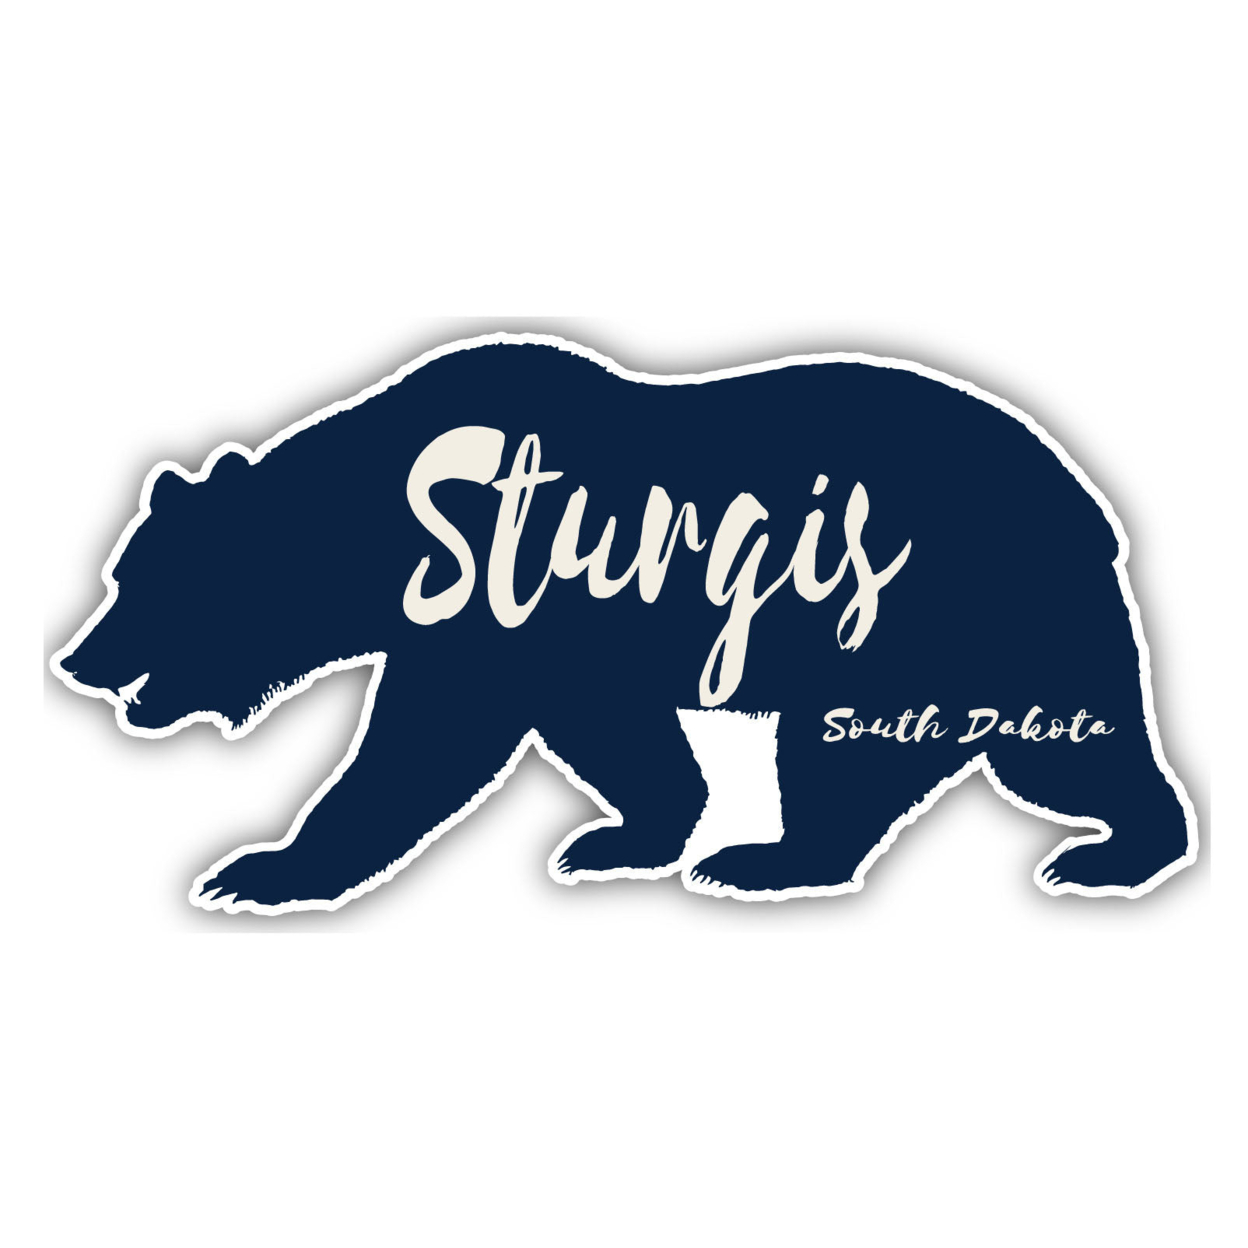 Sturgis South Dakota Souvenir Decorative Stickers (Choose Theme And Size) - Single Unit, 4-Inch, Bear